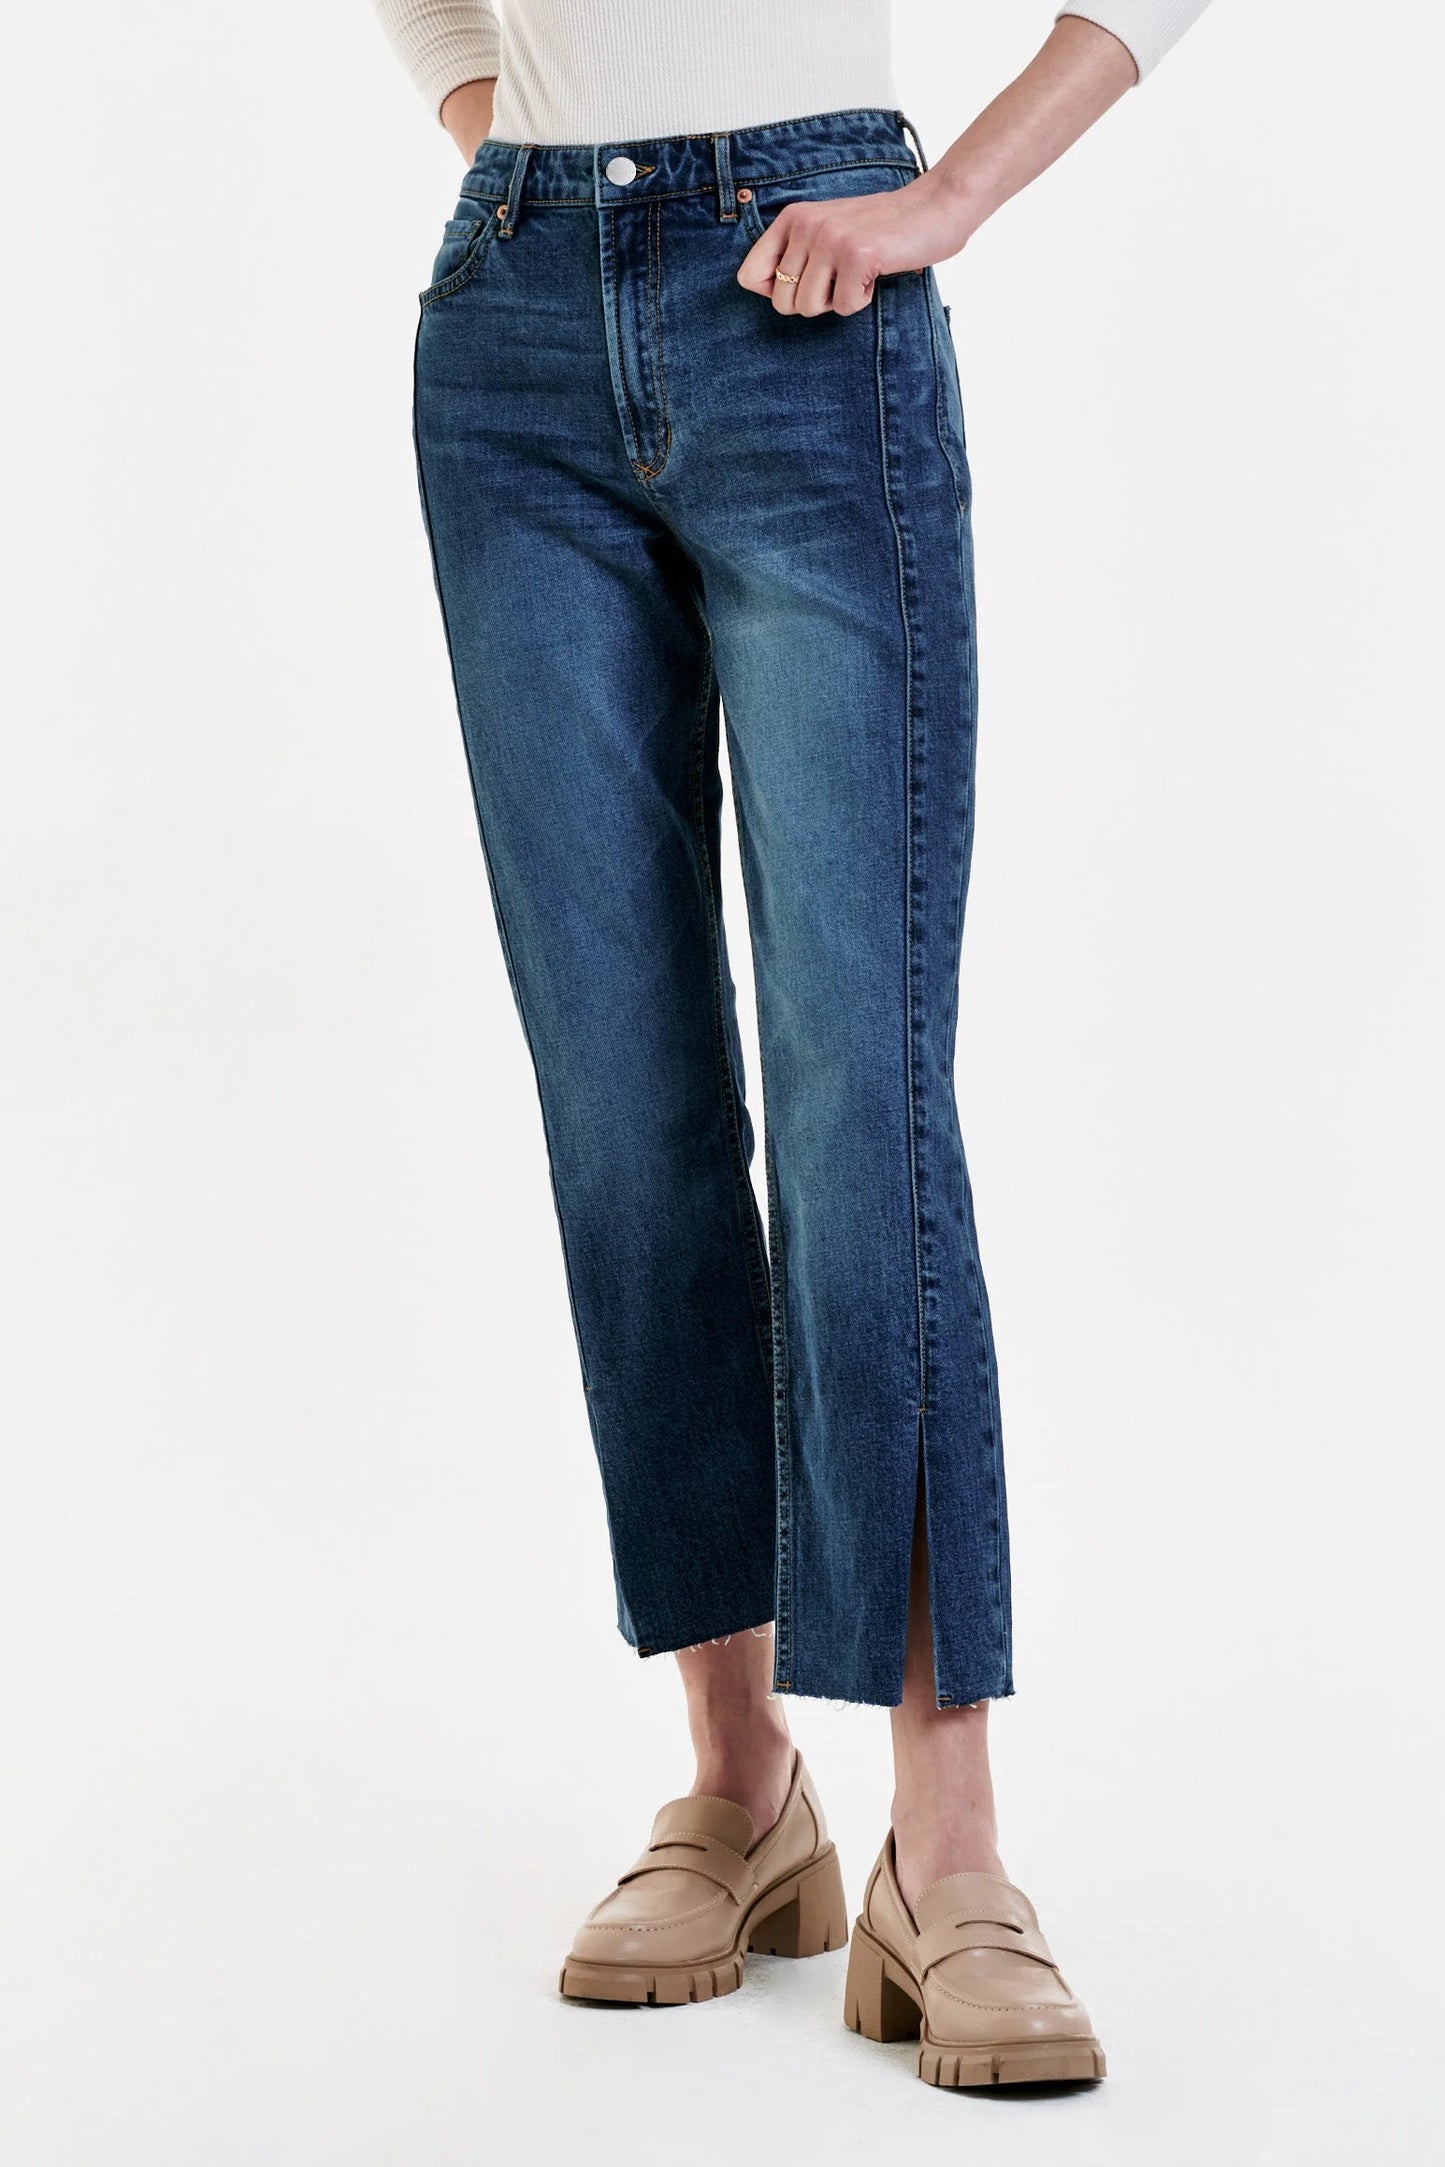 Dear John Denim  Jodi Super High Rise Cropped Straight Jeans – Madisons on  Main